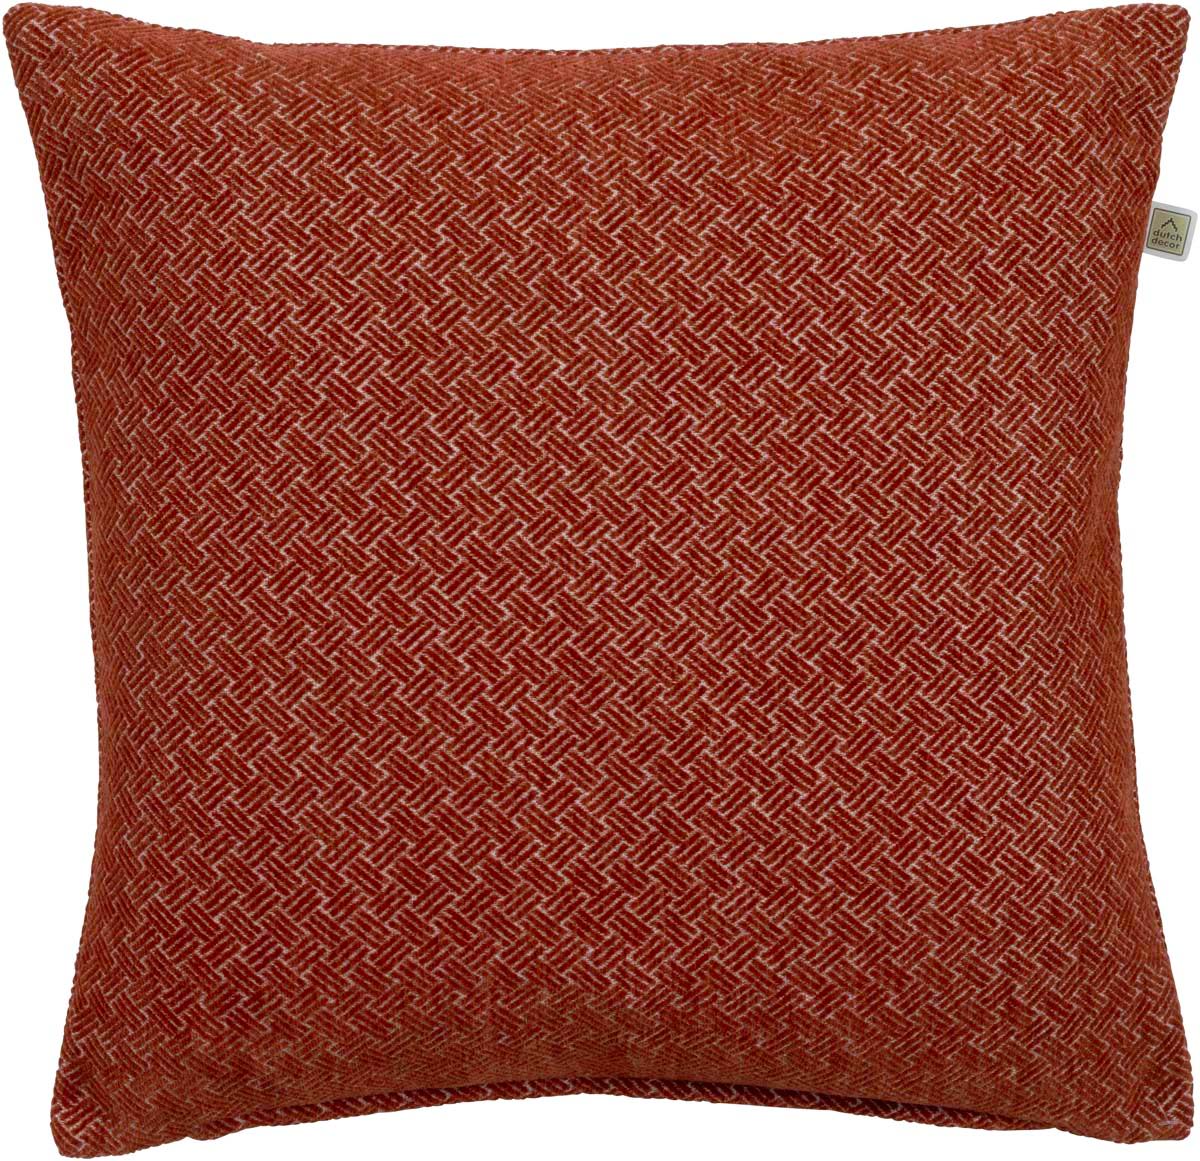 KATAN - Kussenhoes 45x45 cm - chili - rood - visgraat patroon